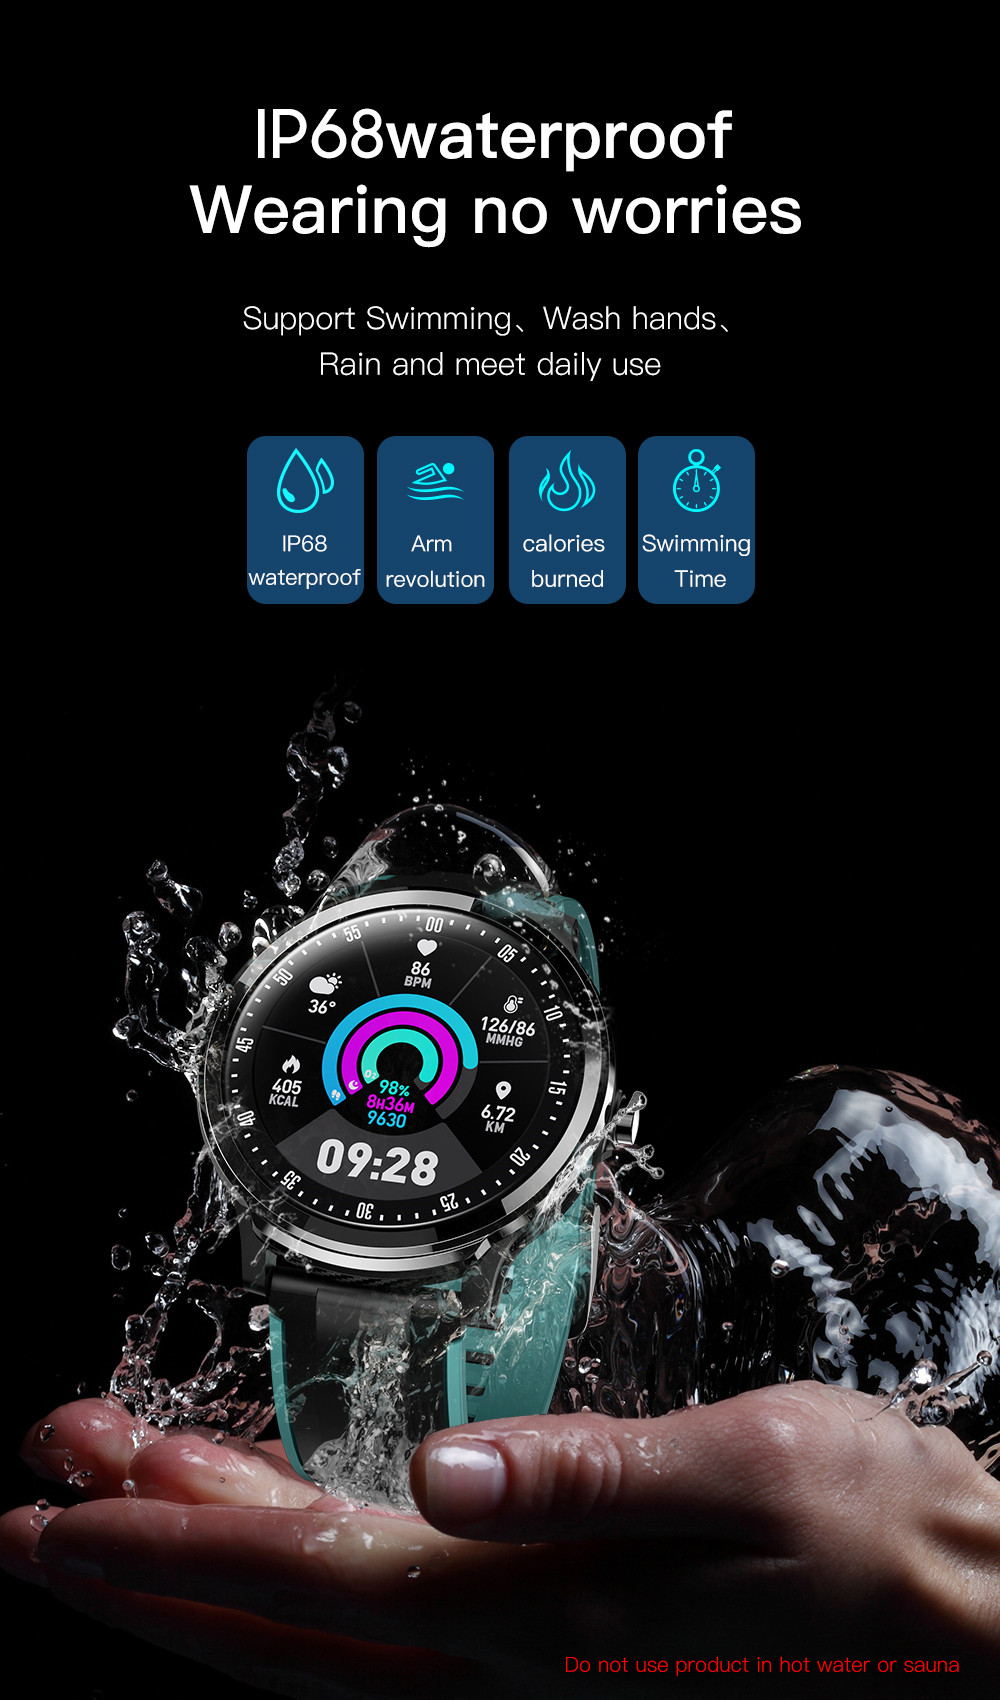 Newest smart watch SN80 fashion watch fitness tracker